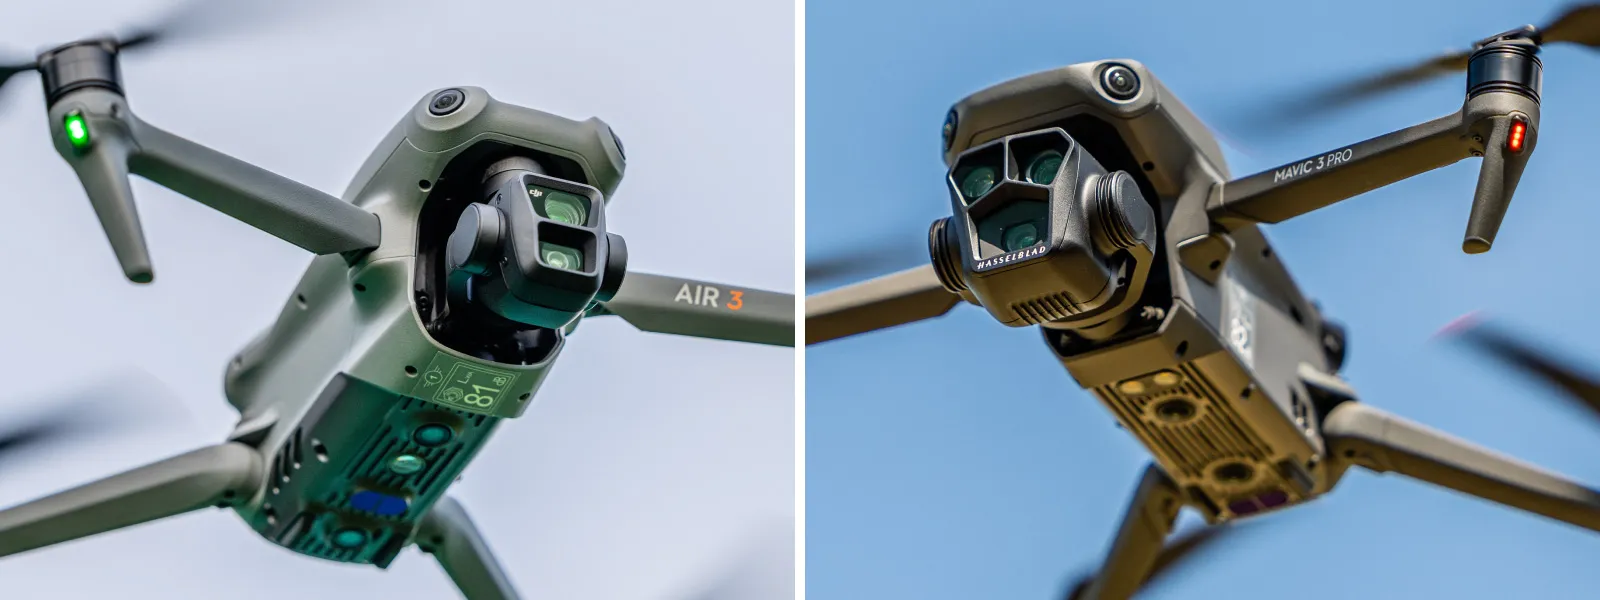 Drones-For-Tower-Inspection-DJI-Air-3-Vs-Mavic-3-Pro